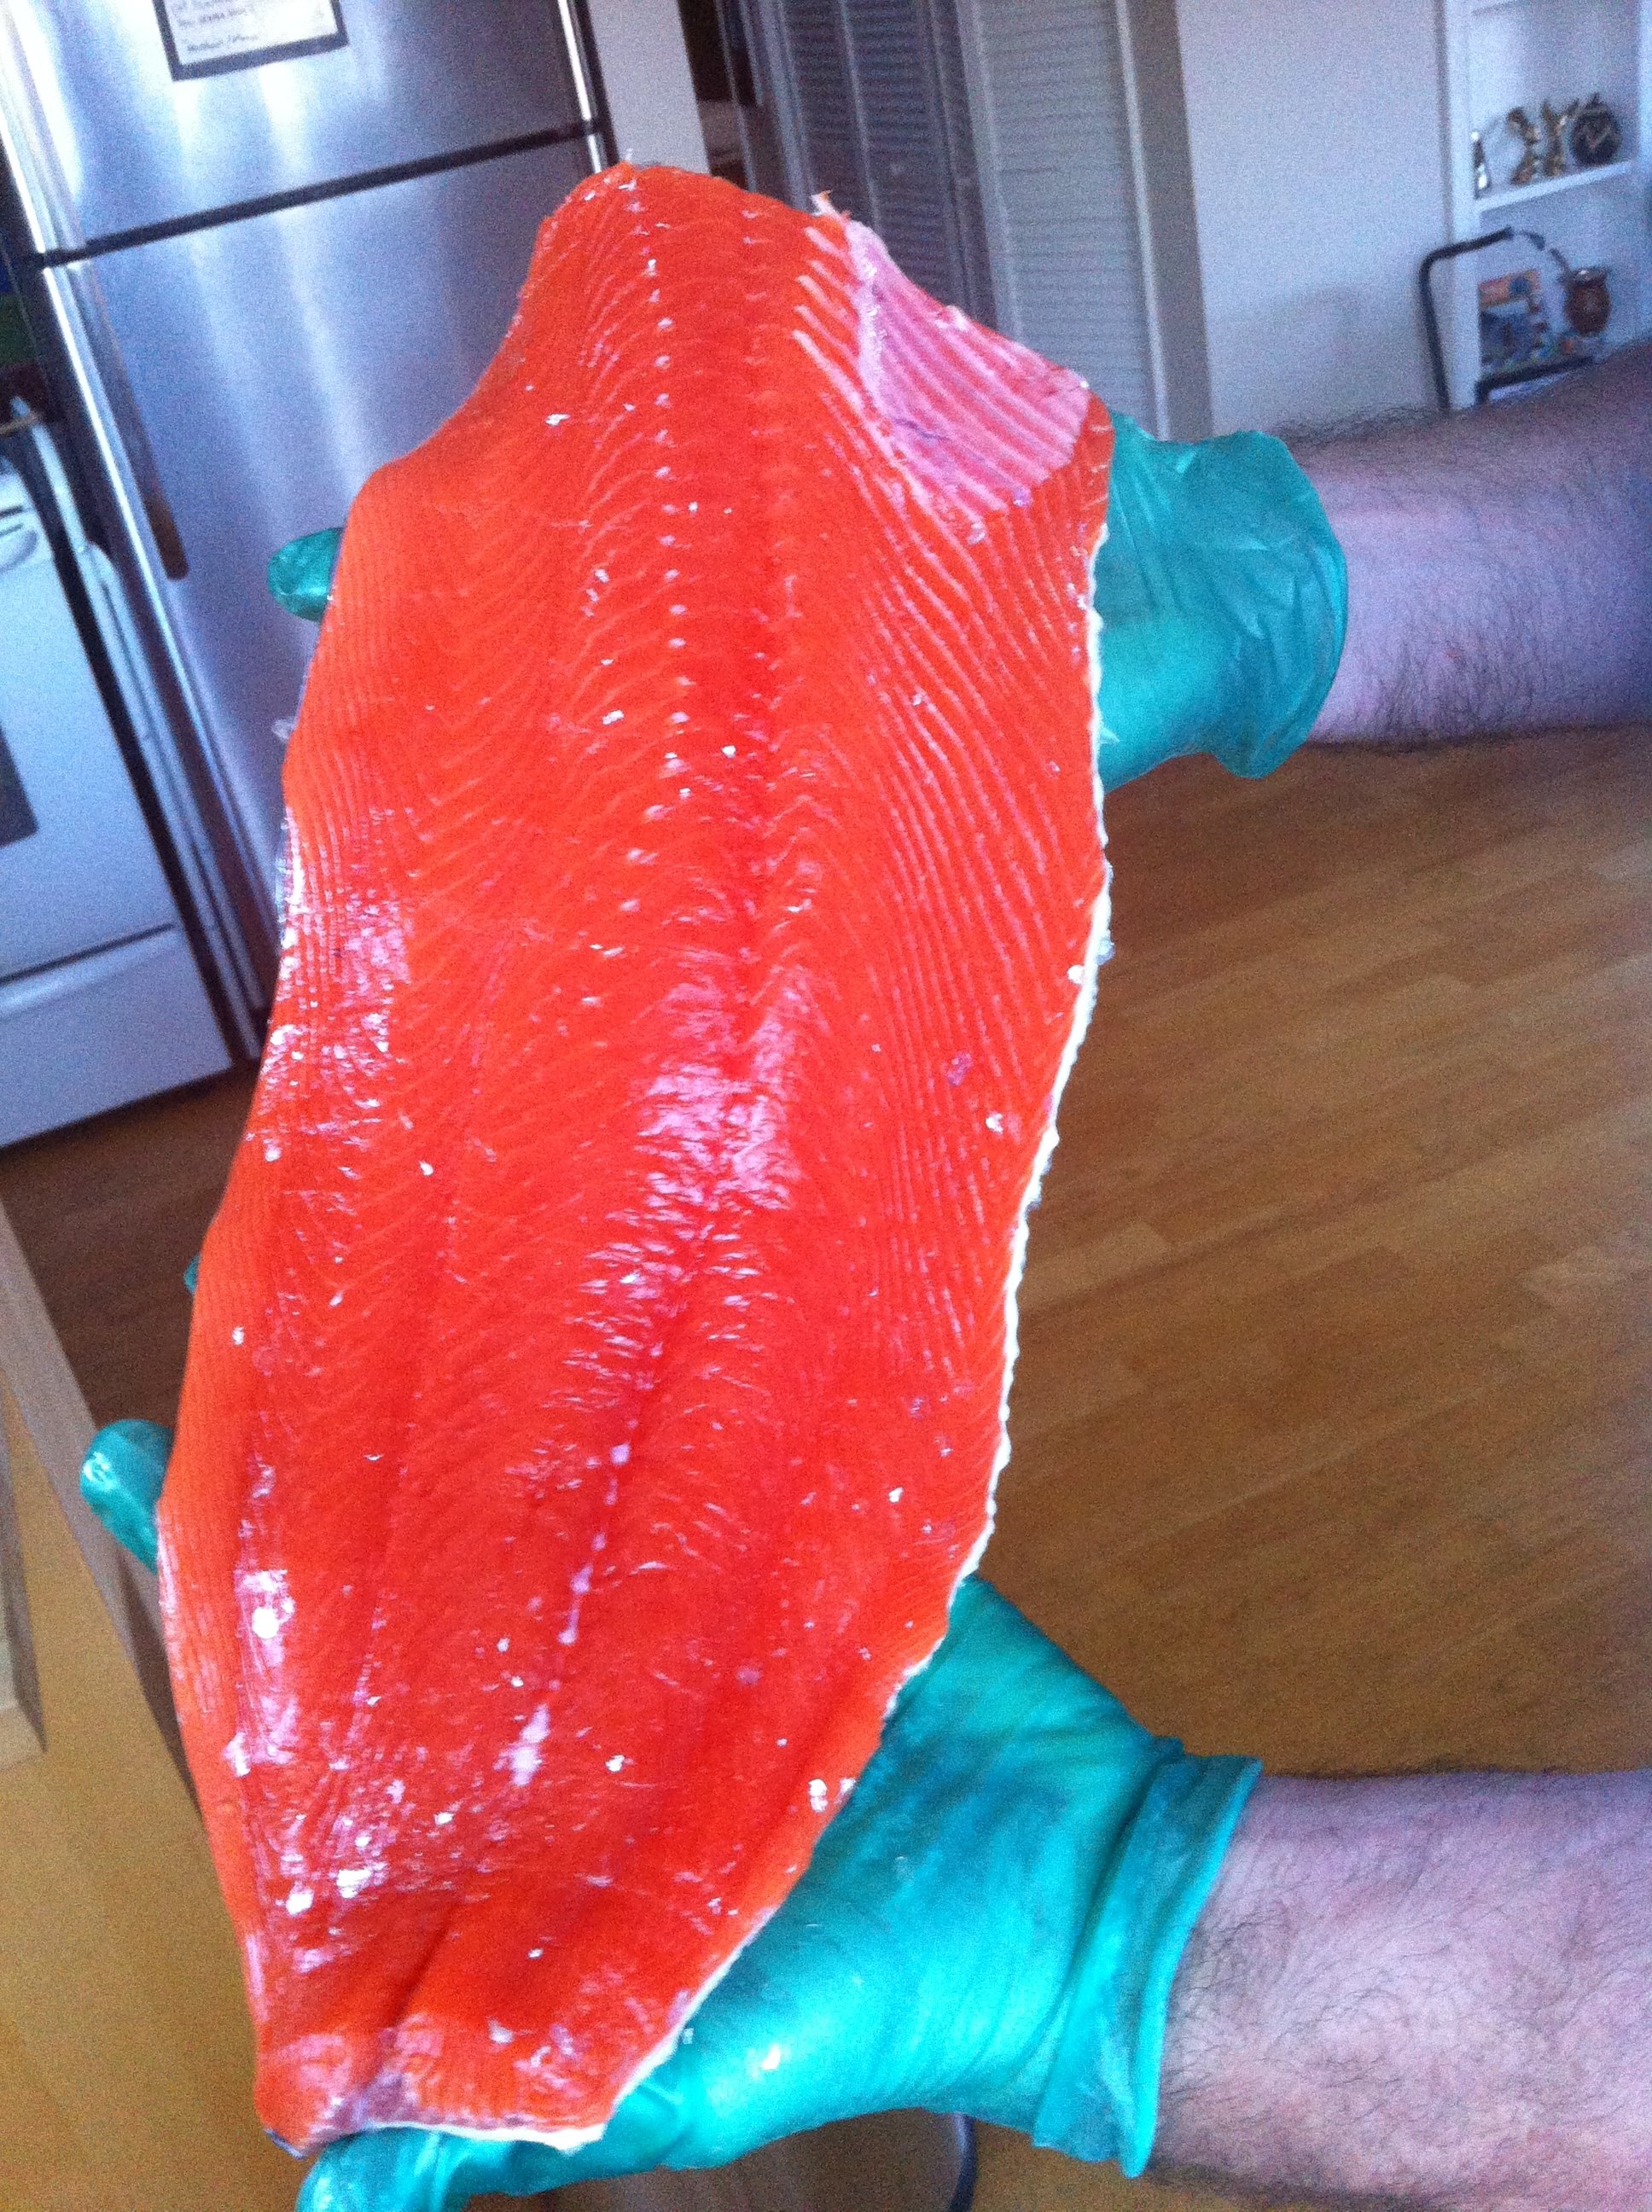 Fresh caught Salmon